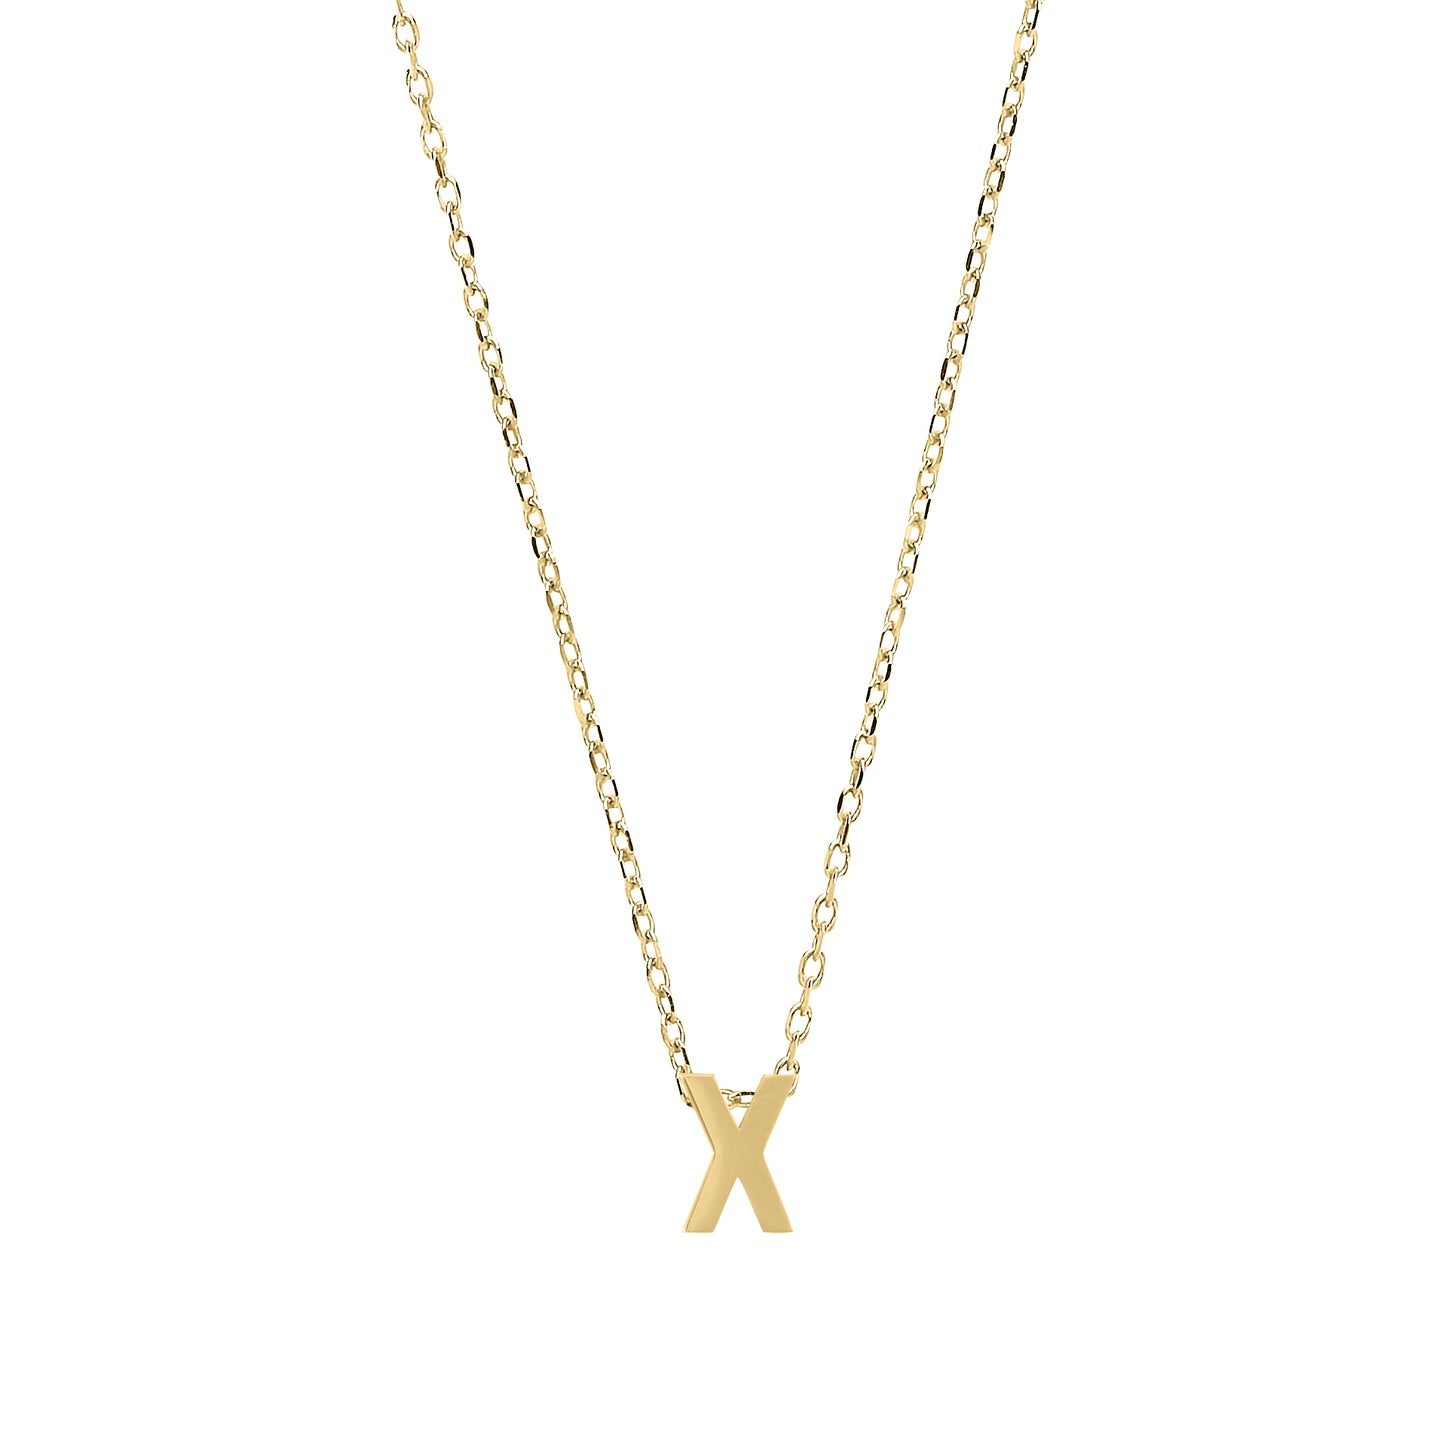 9ct Gold  Letter X Initial Pendant Necklace 17 inch 43cm - G9P6032X